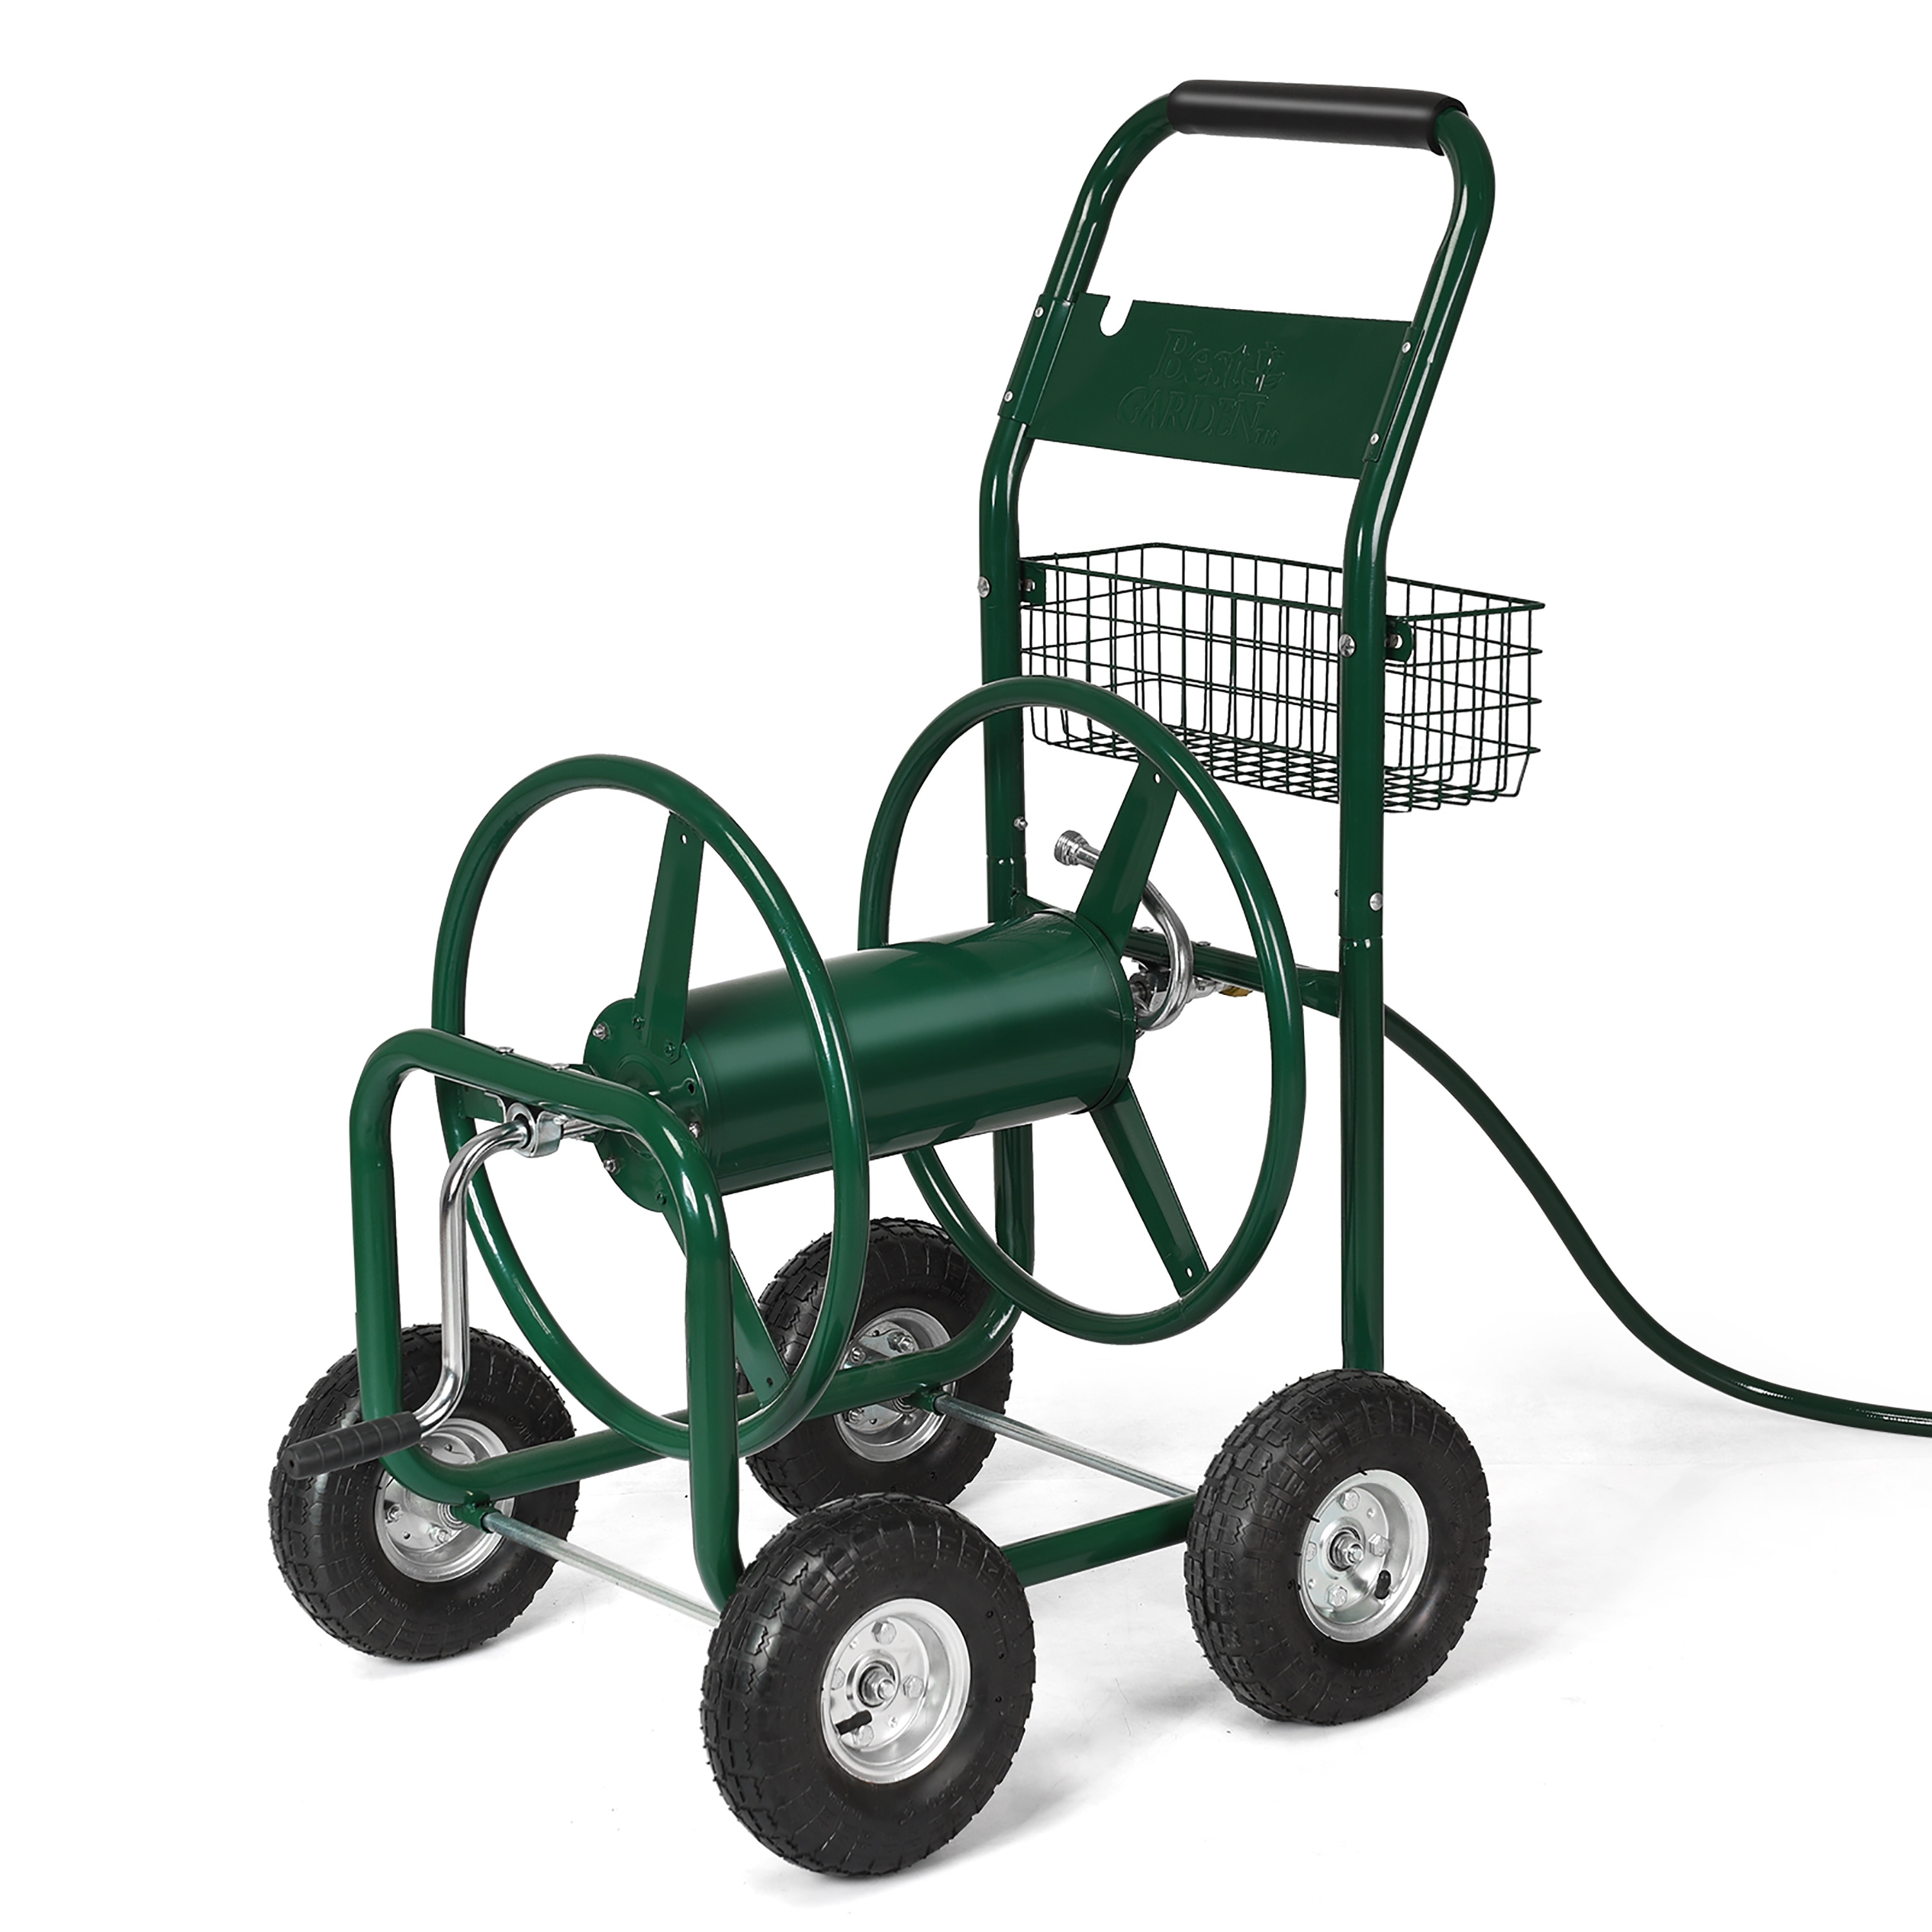 Liberty Garden Products LBG-872-2 4 Wheel Hose Reel Cart Holds 350 Feet 